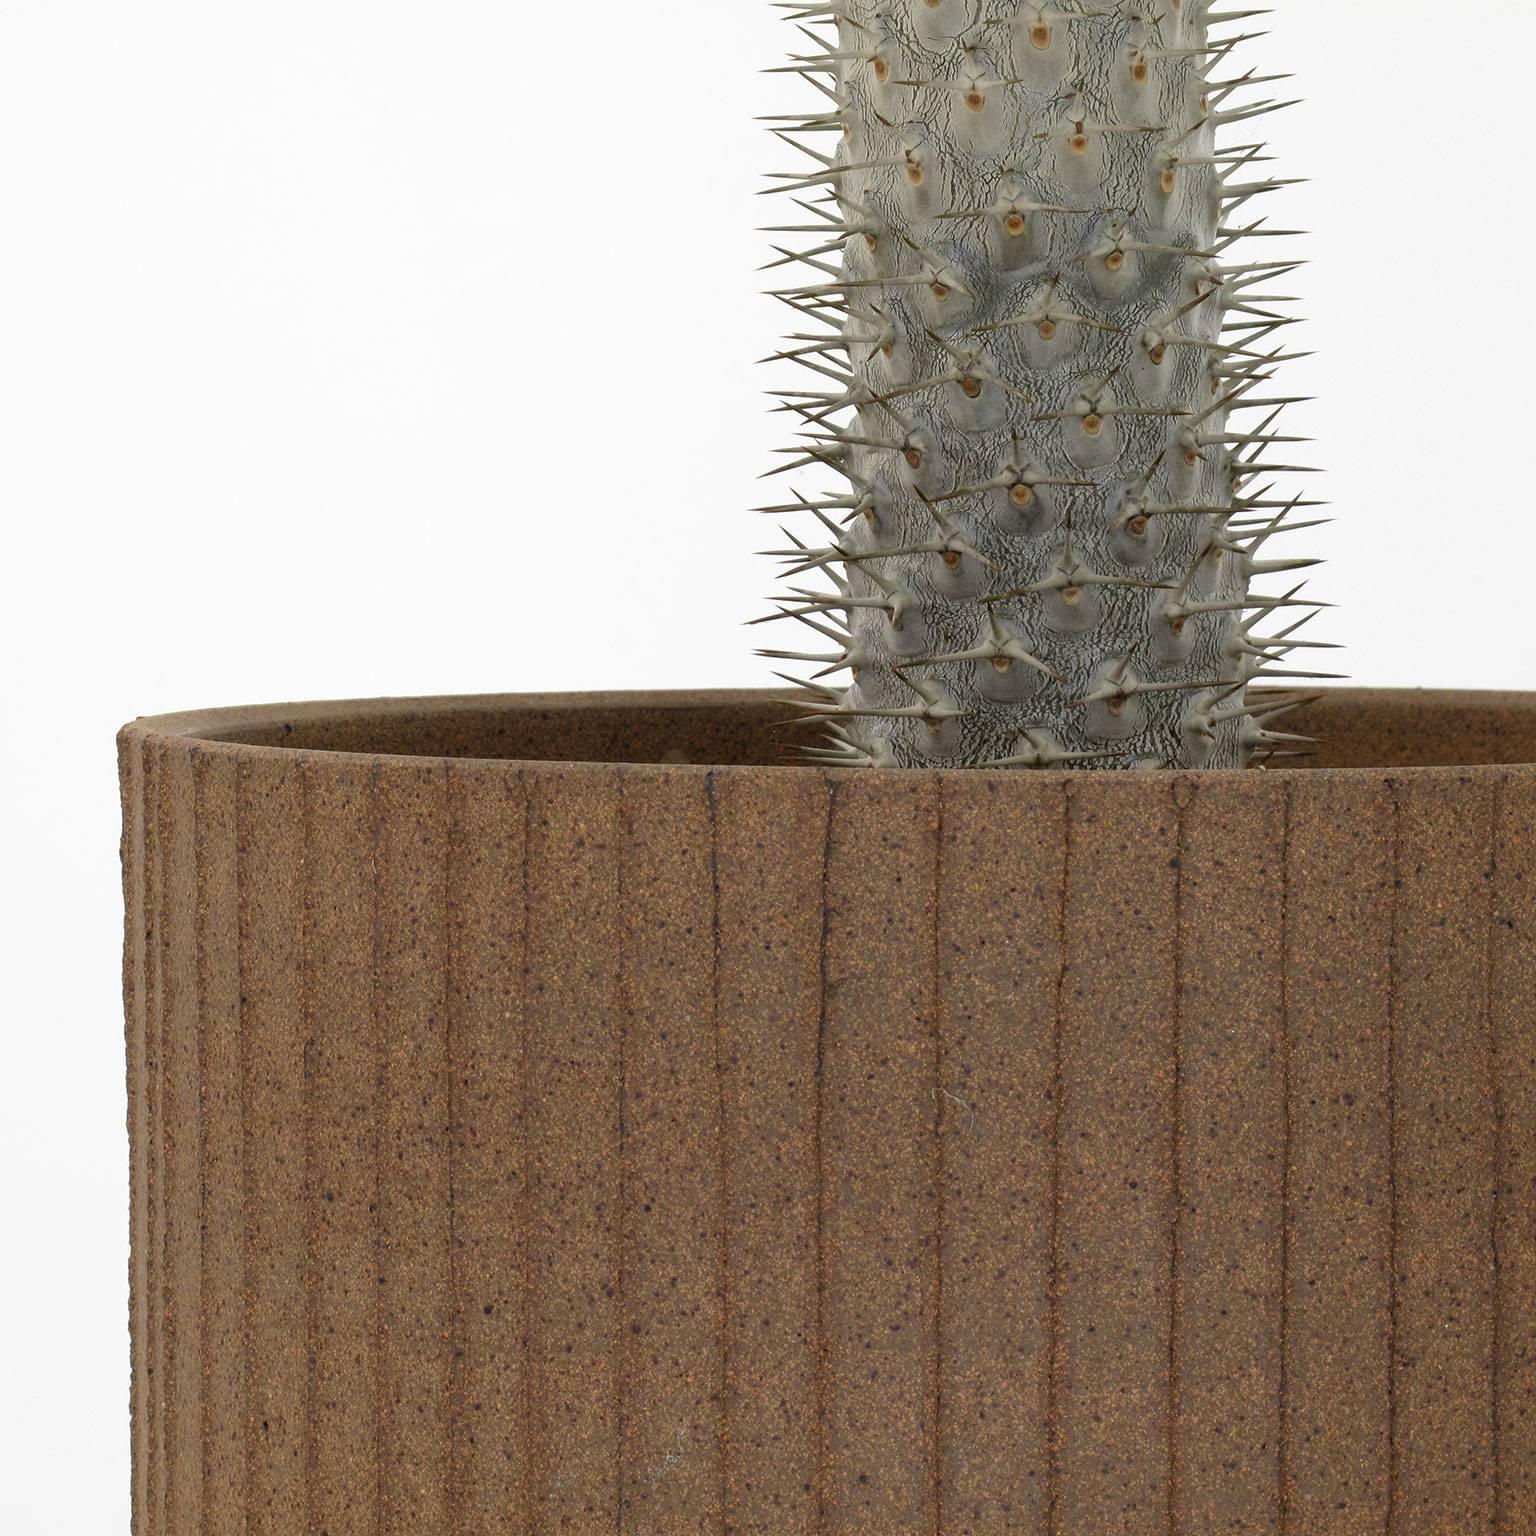 American David Cressey Ceramic Planter, 'Lines' Design, 1960s For Sale